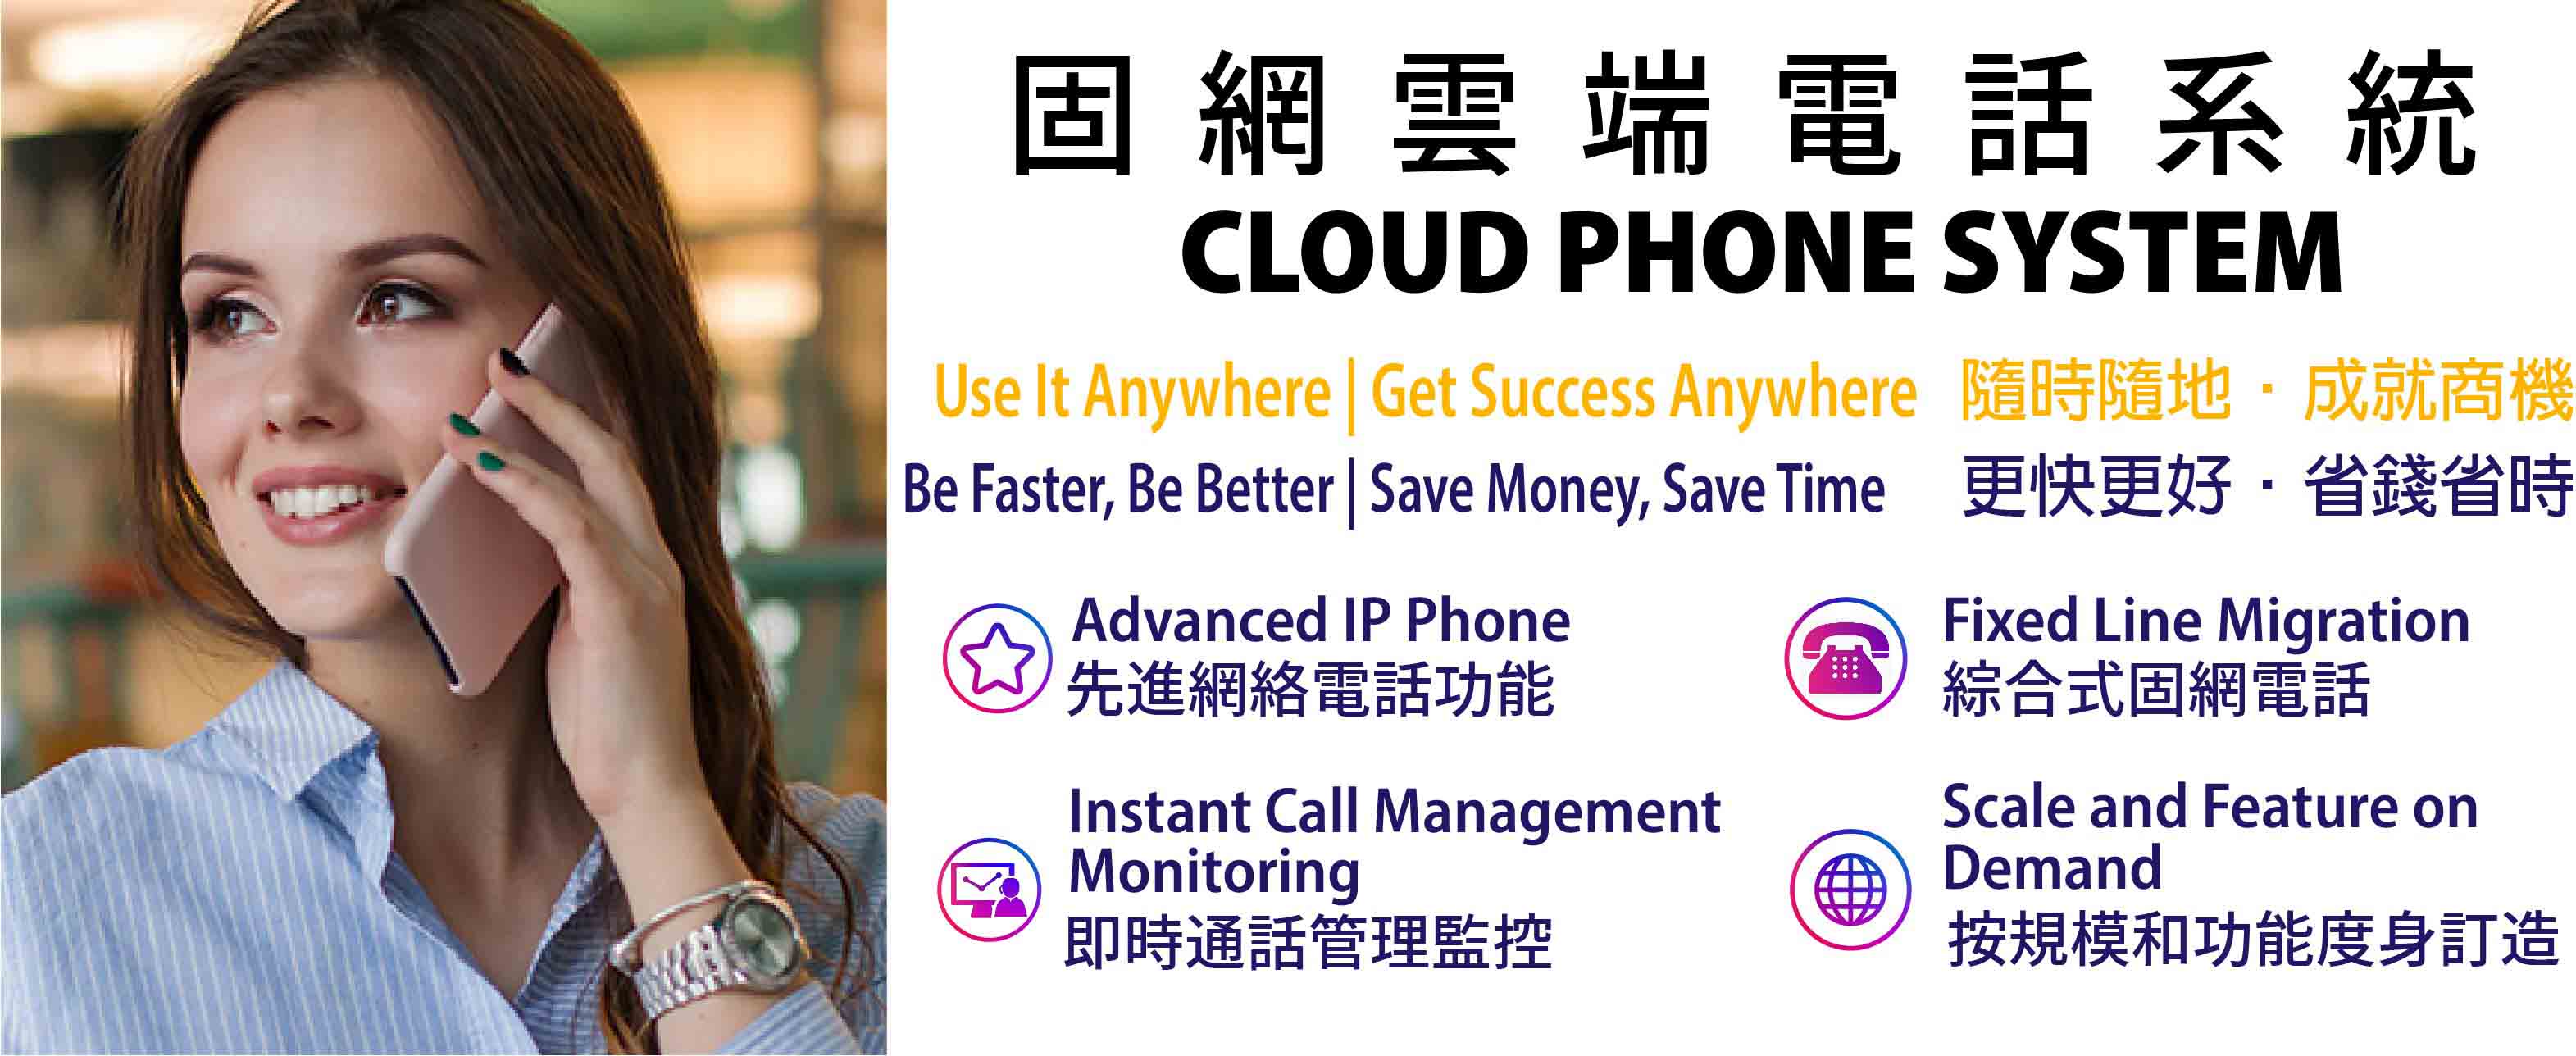 Cloud Phone